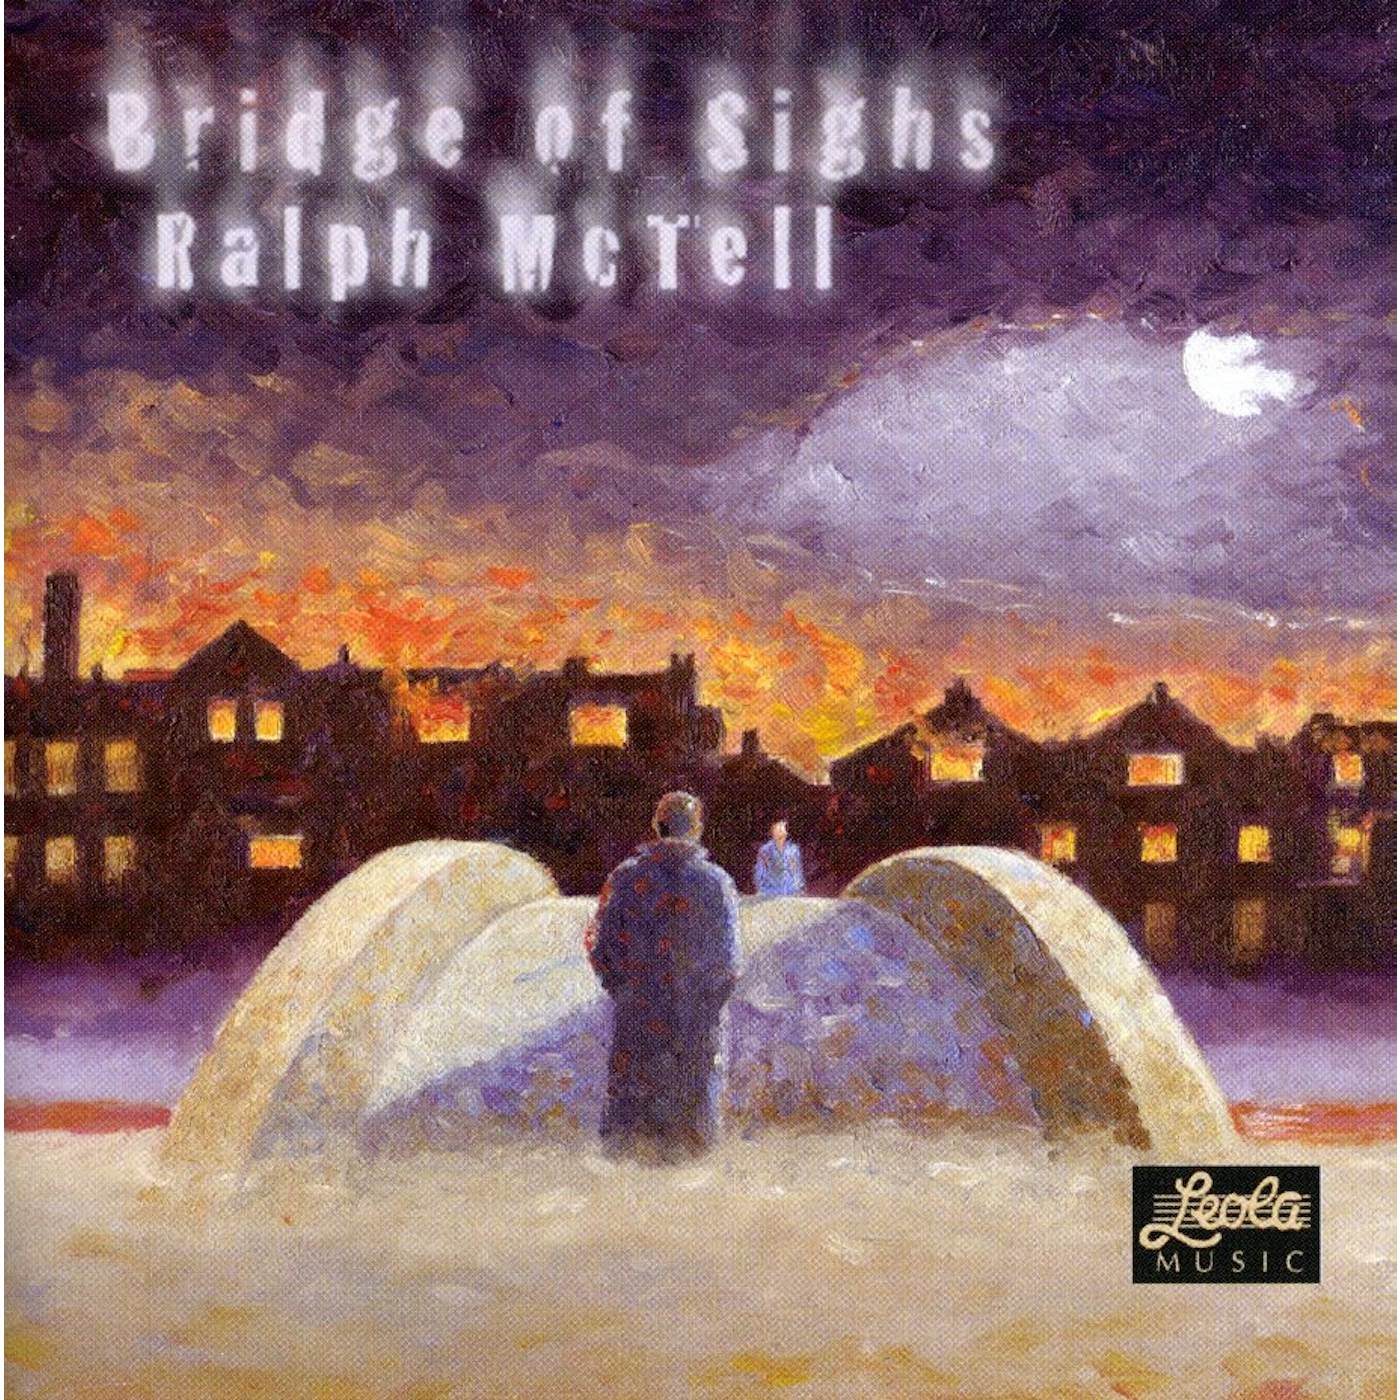 Ralph McTell BRIDGE OF SIGHS CD